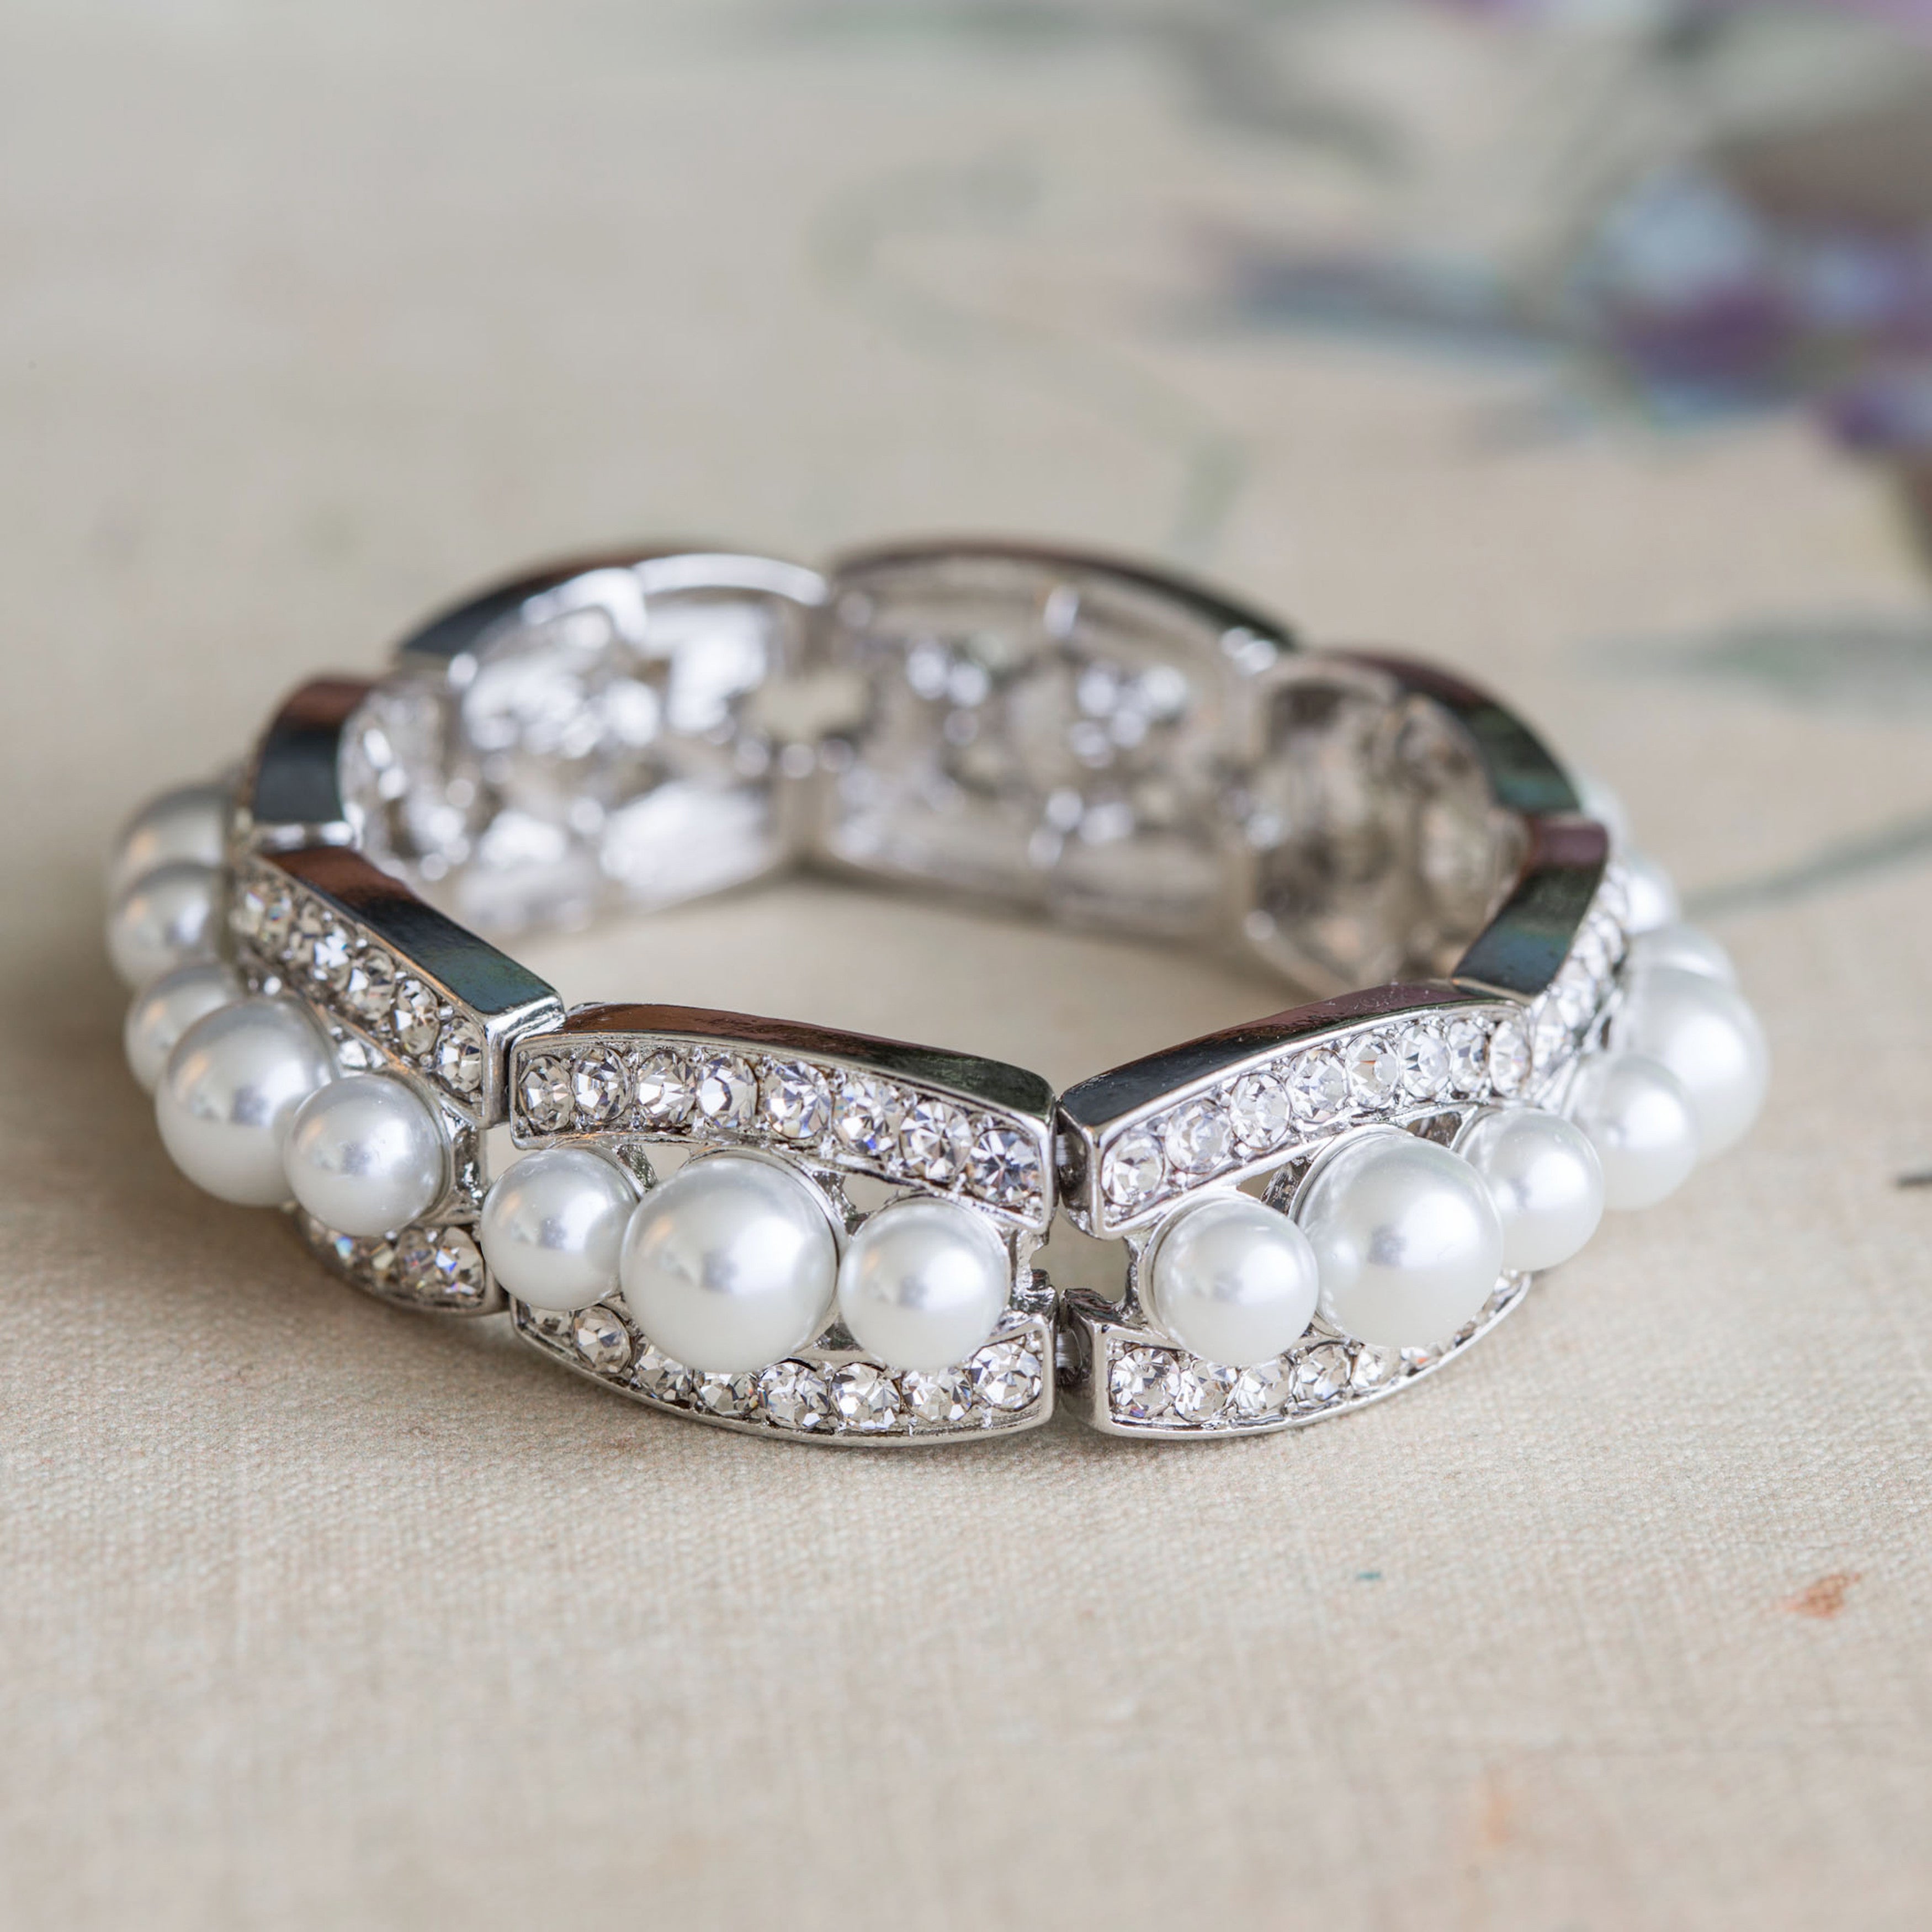 Isla pearl and crystal bracelet